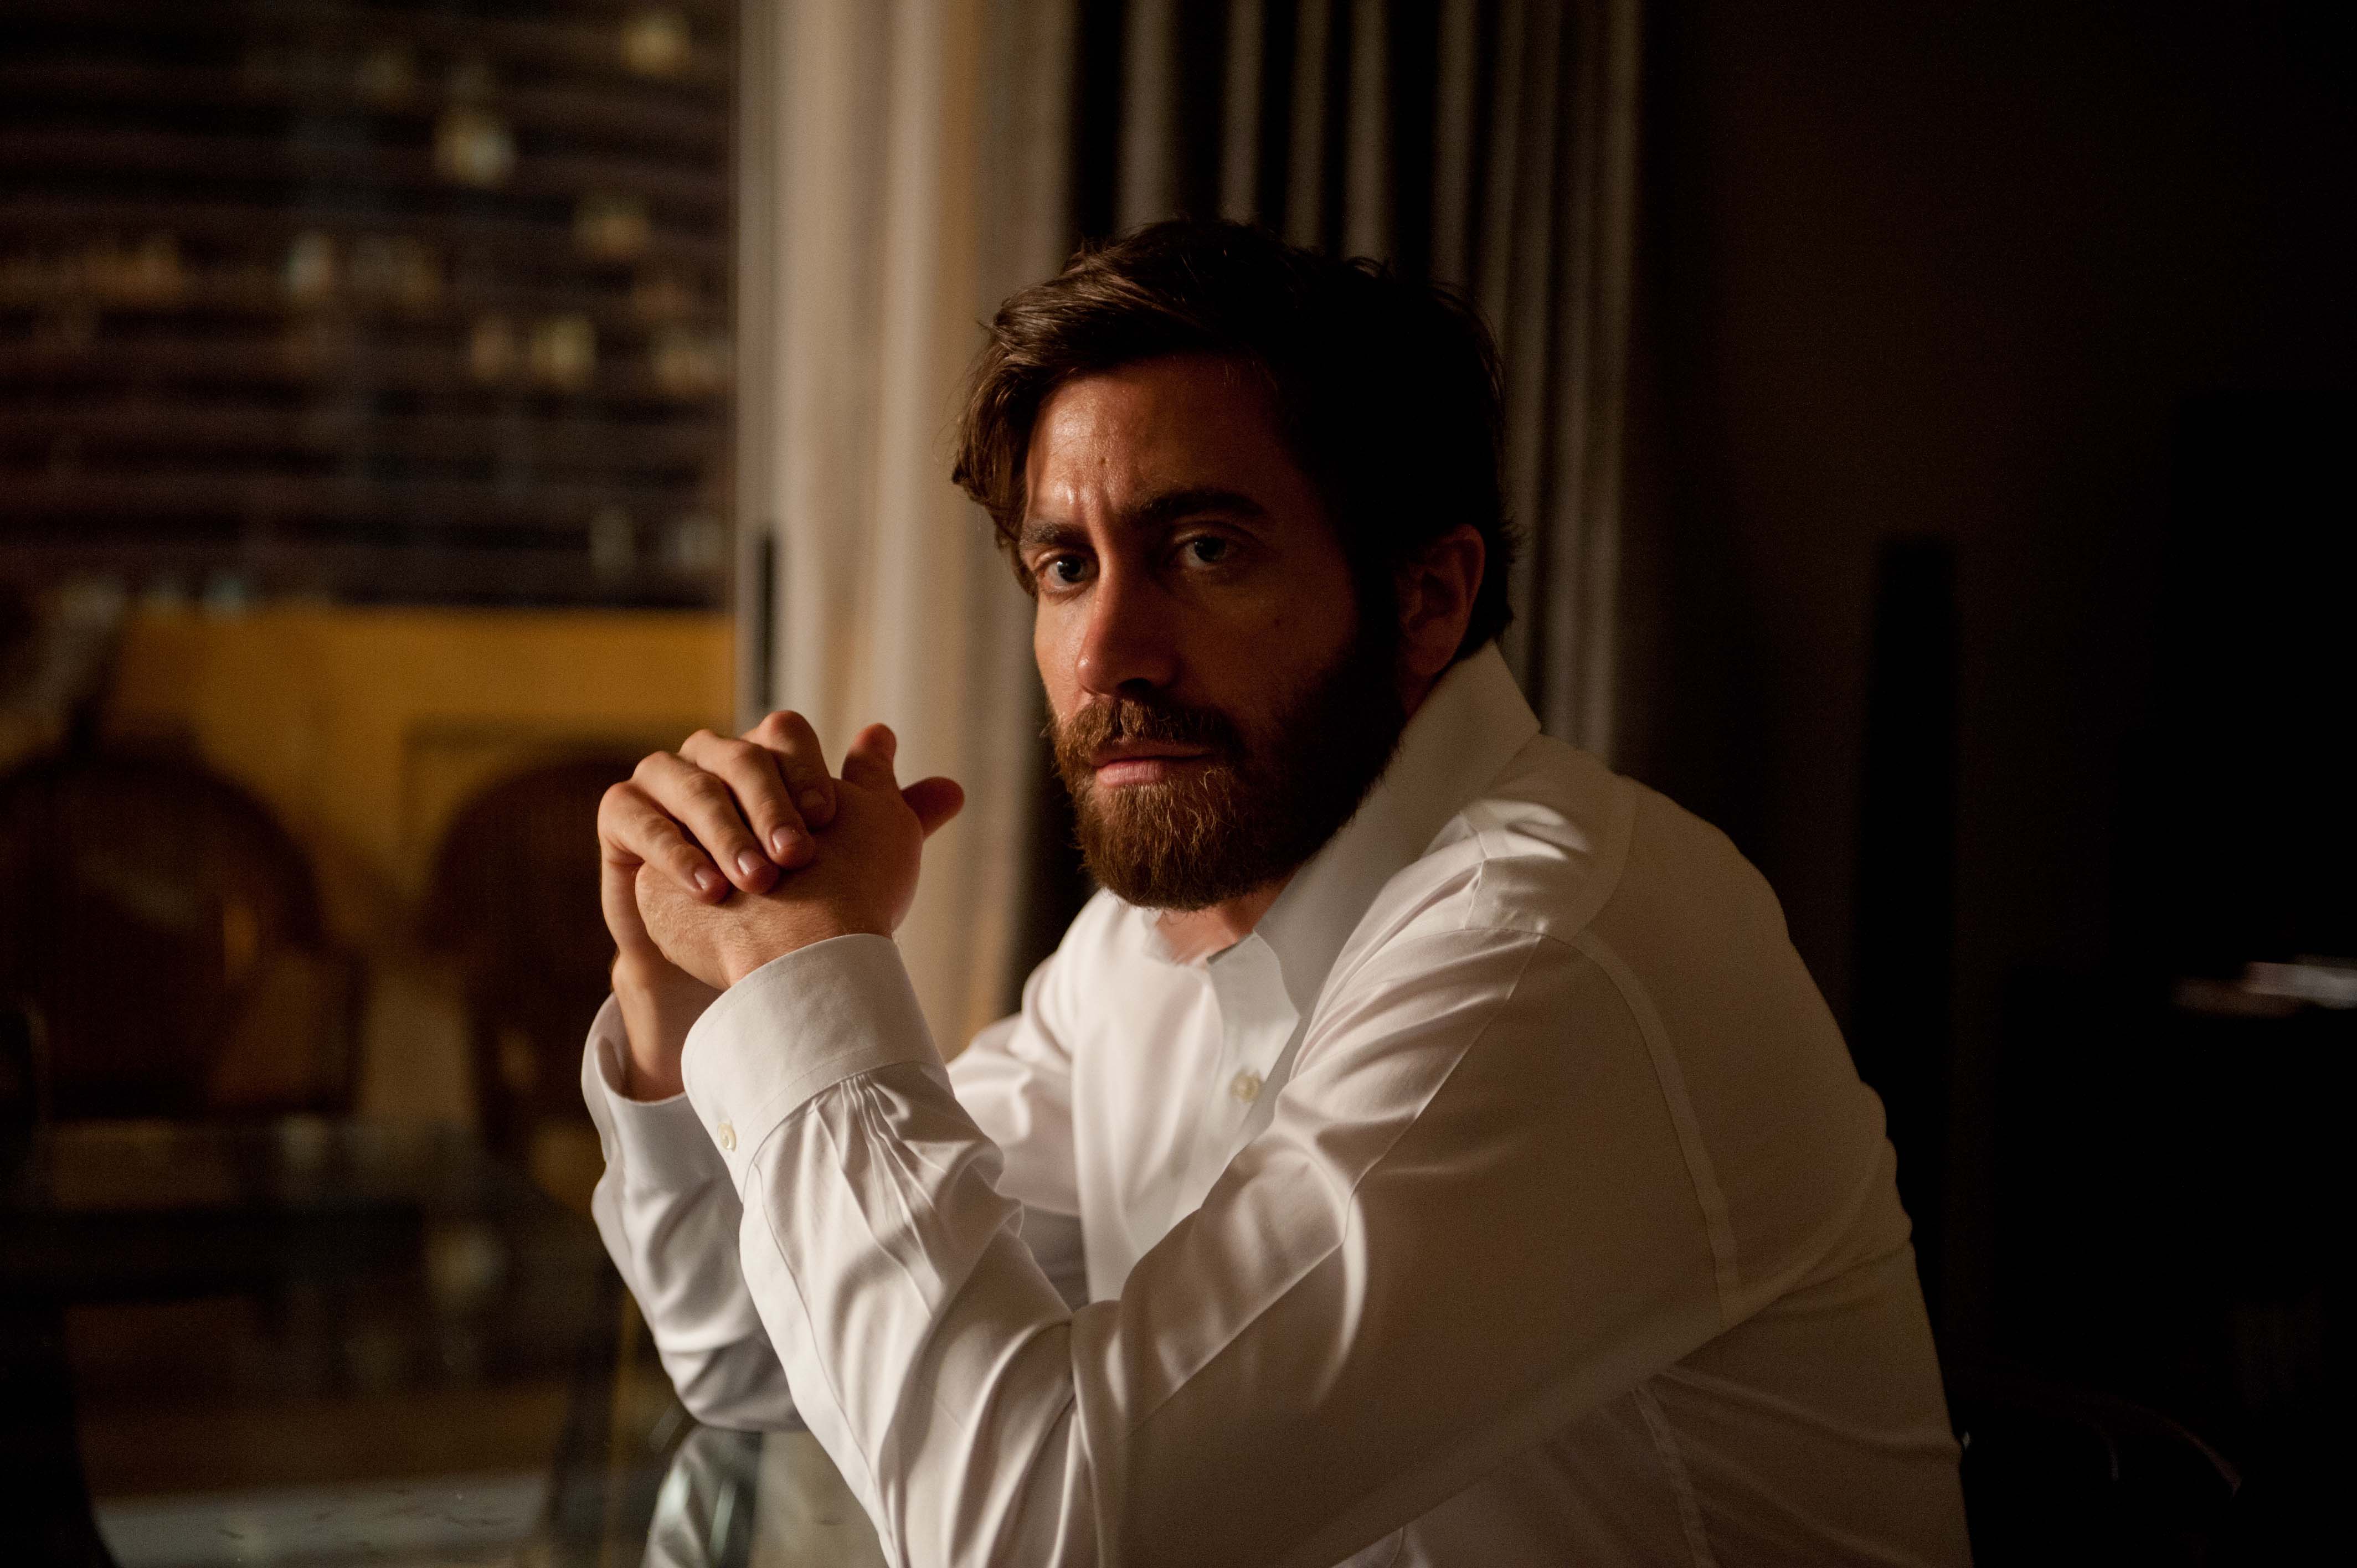 Jake Gyllenhaal reunites with director Denis Villenueve for his new film